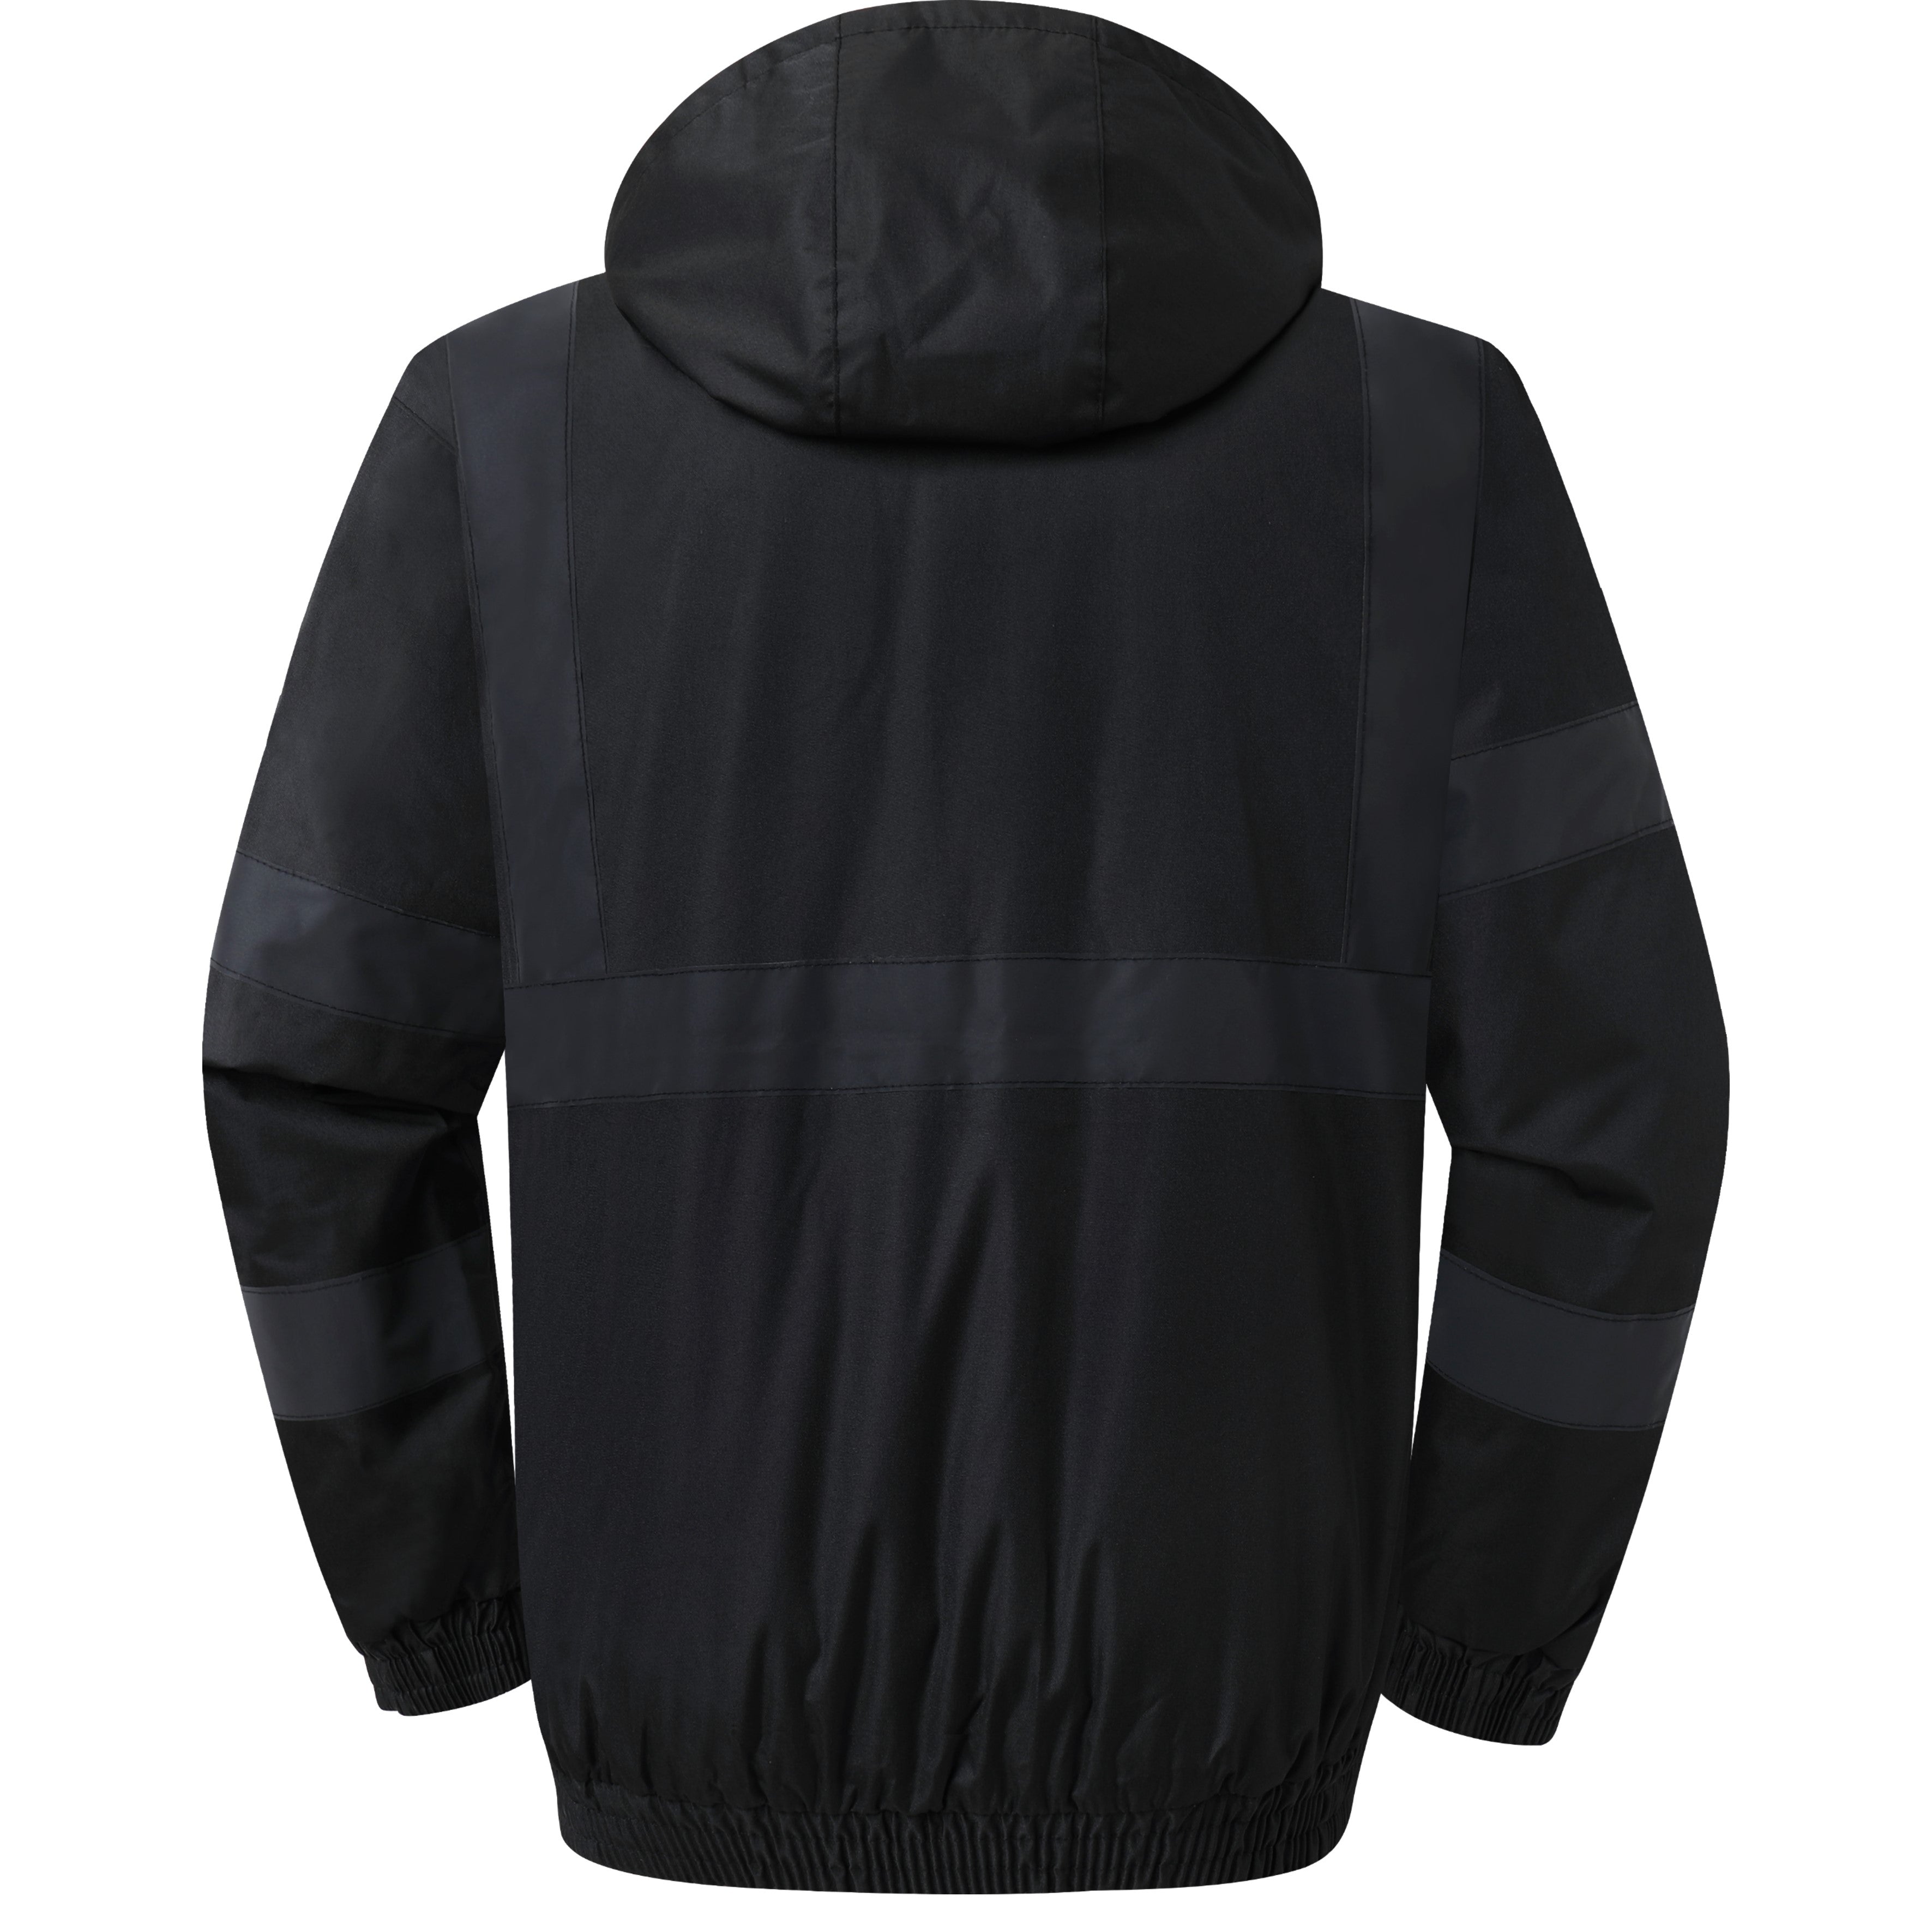 JKSafety Winter Hi-Vis Reflective Safety Jacket, Waterproof, 6 Pockets